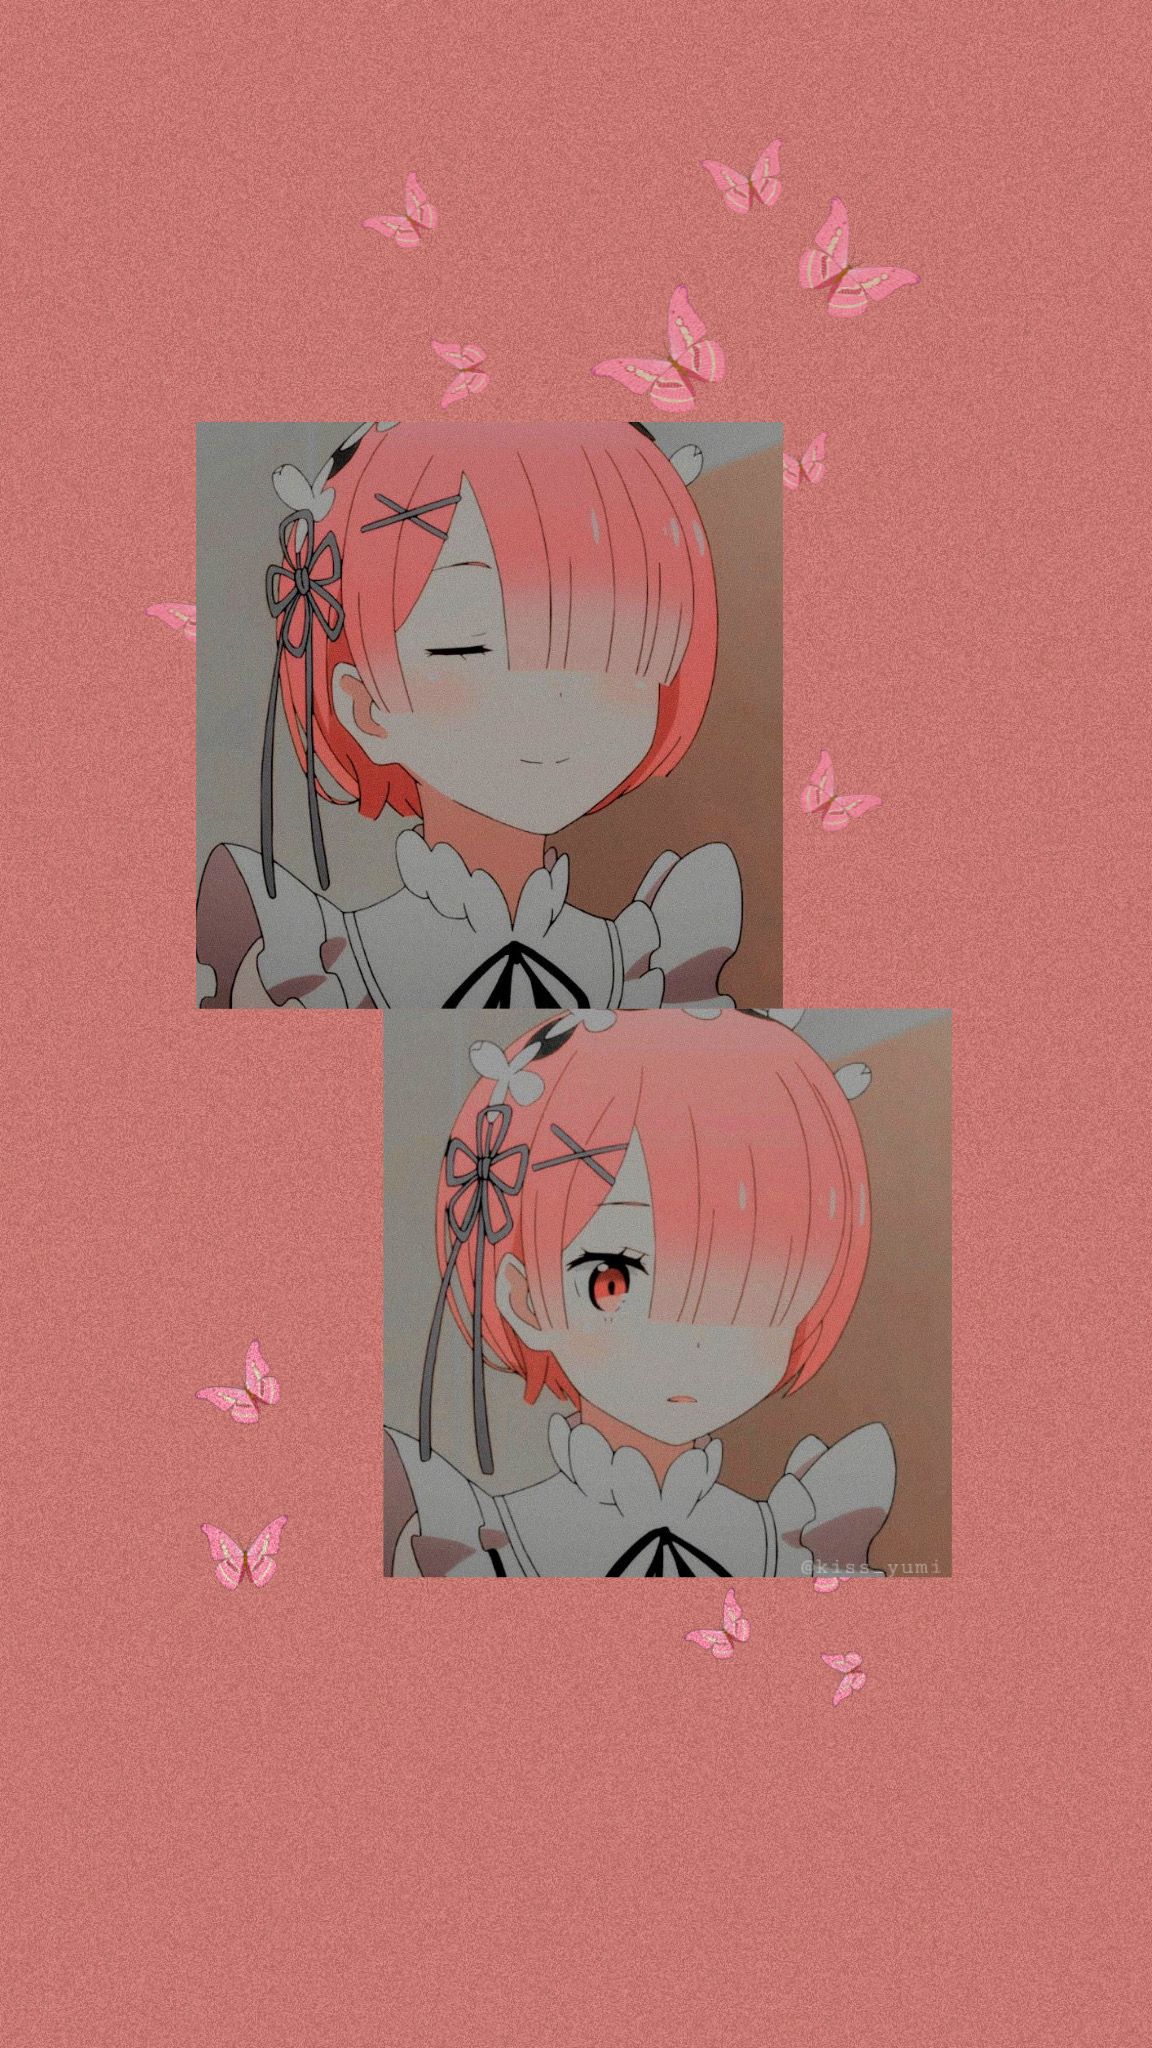 R a m - Anime wallpaper, Cute anime wallpaper, Pink wallpaper anime